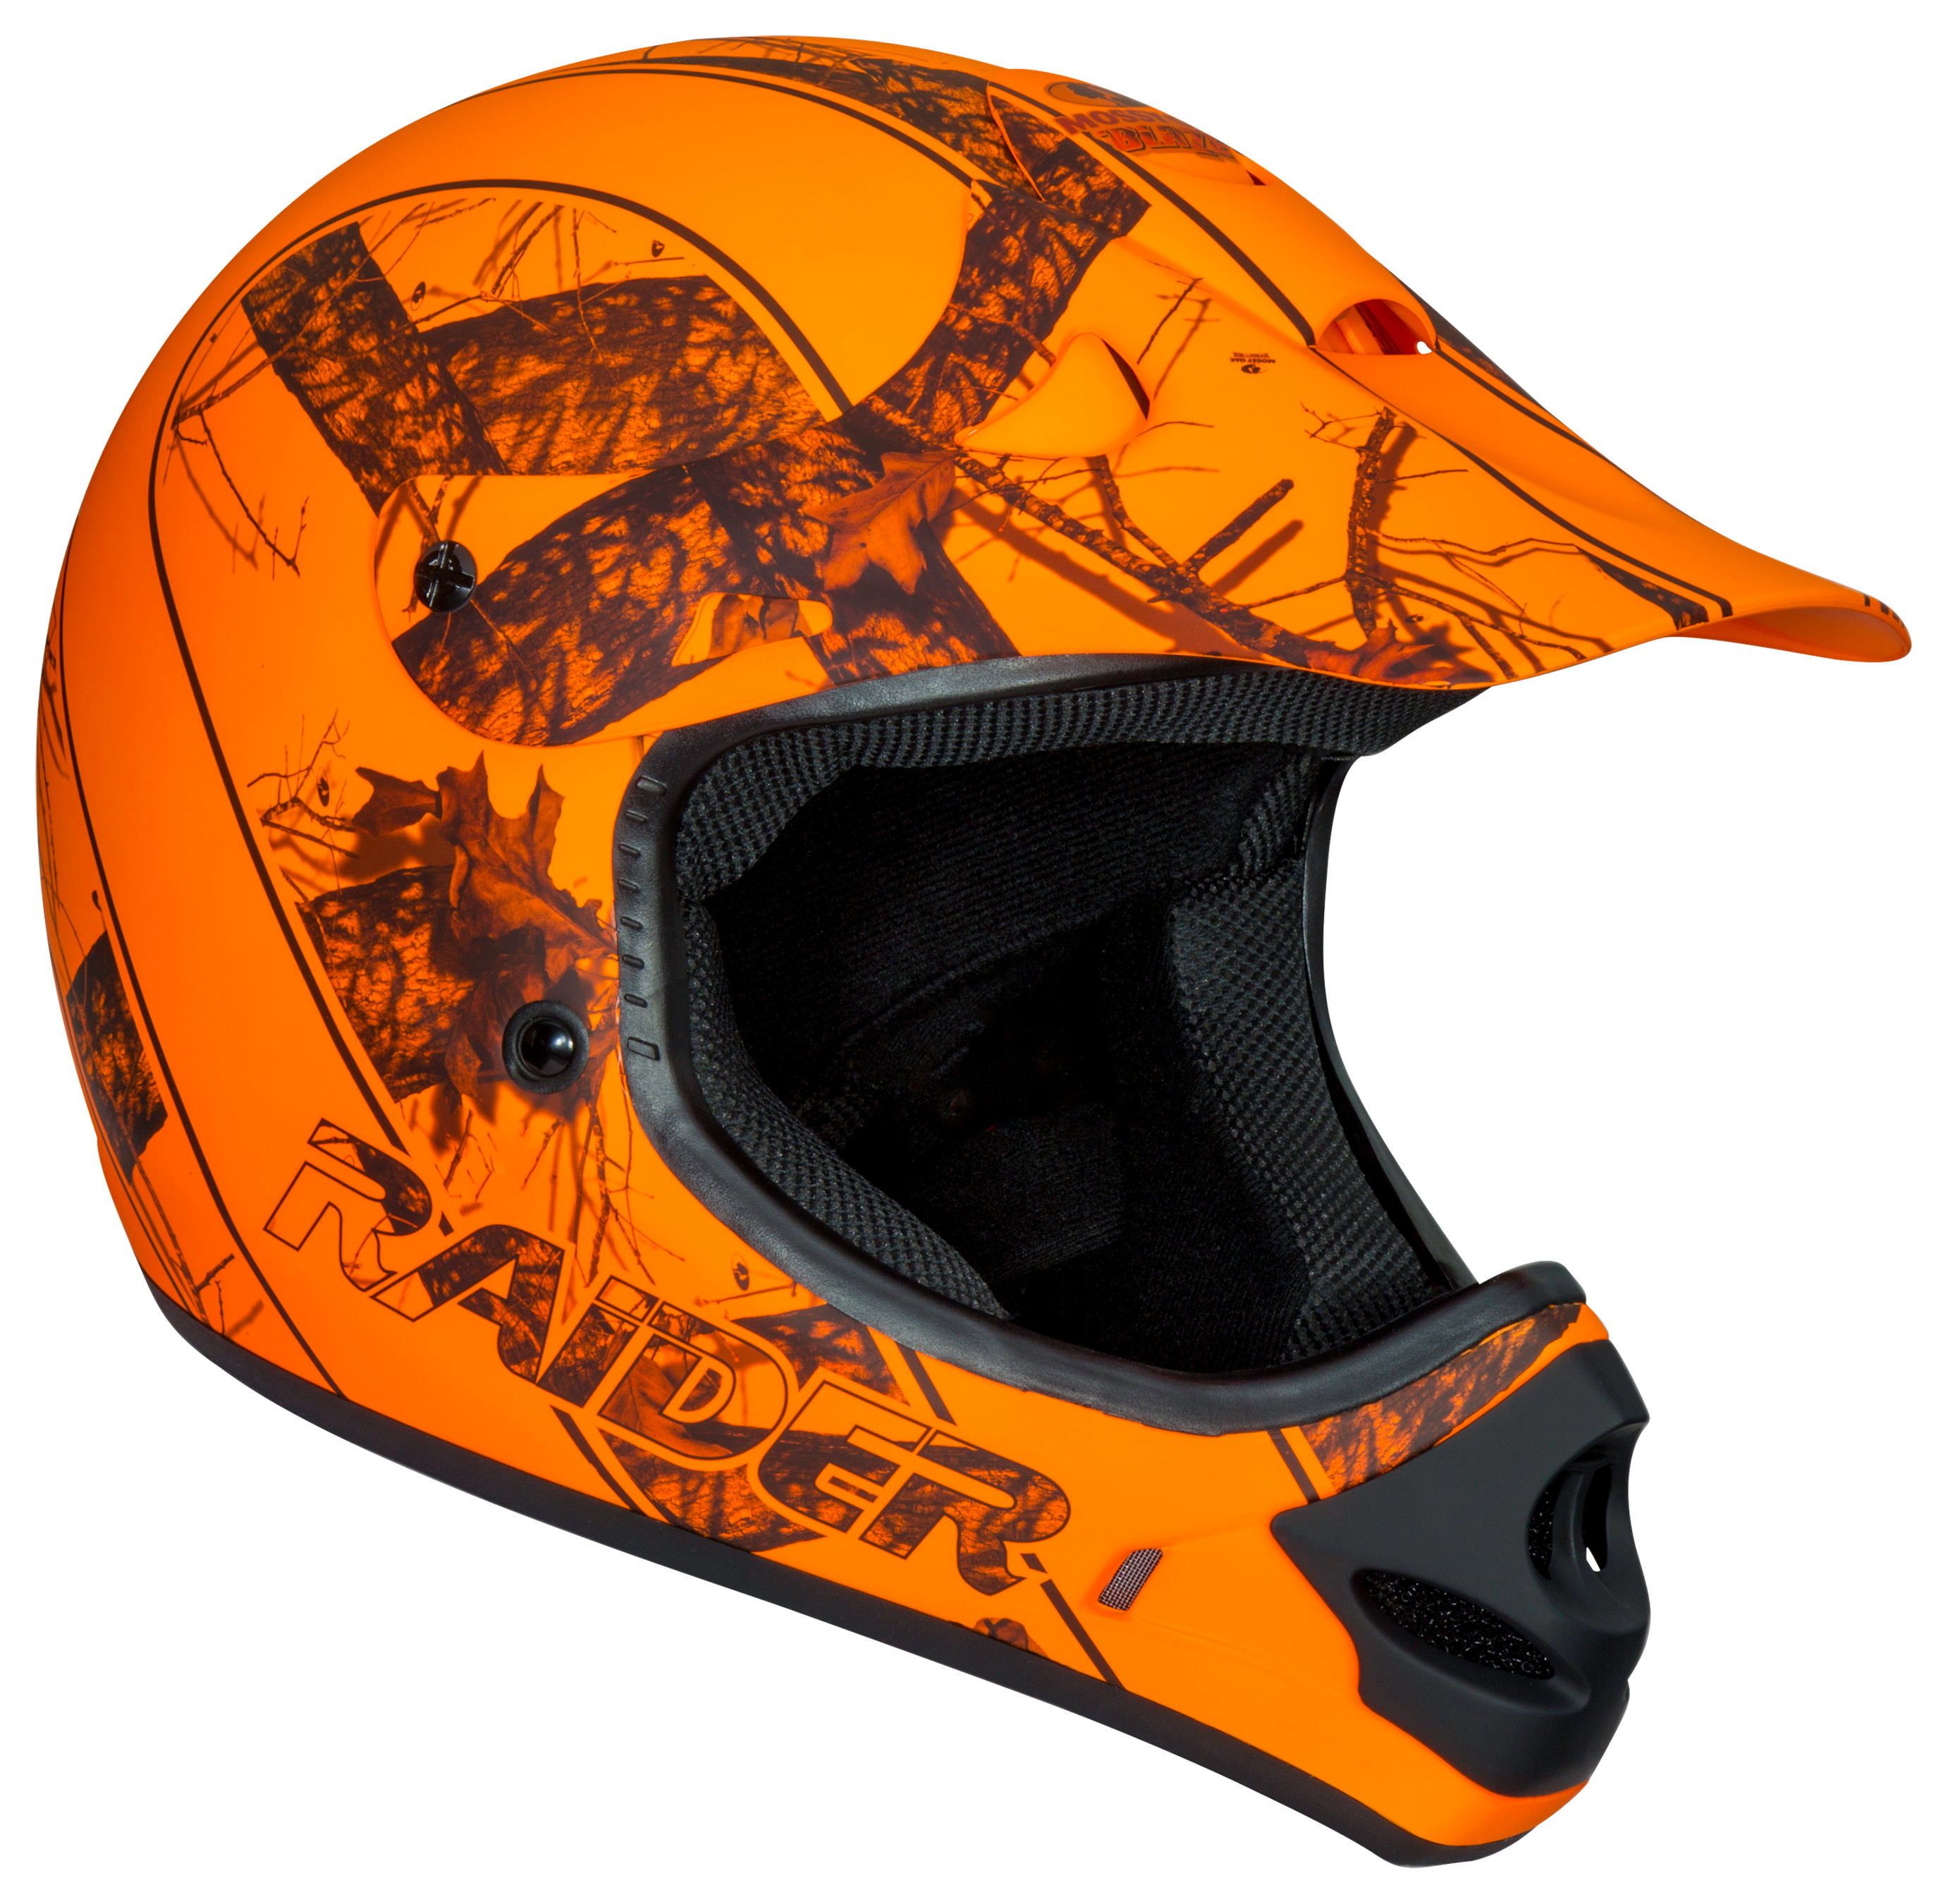 Raider Ambush MX Camo Helmet for Adults